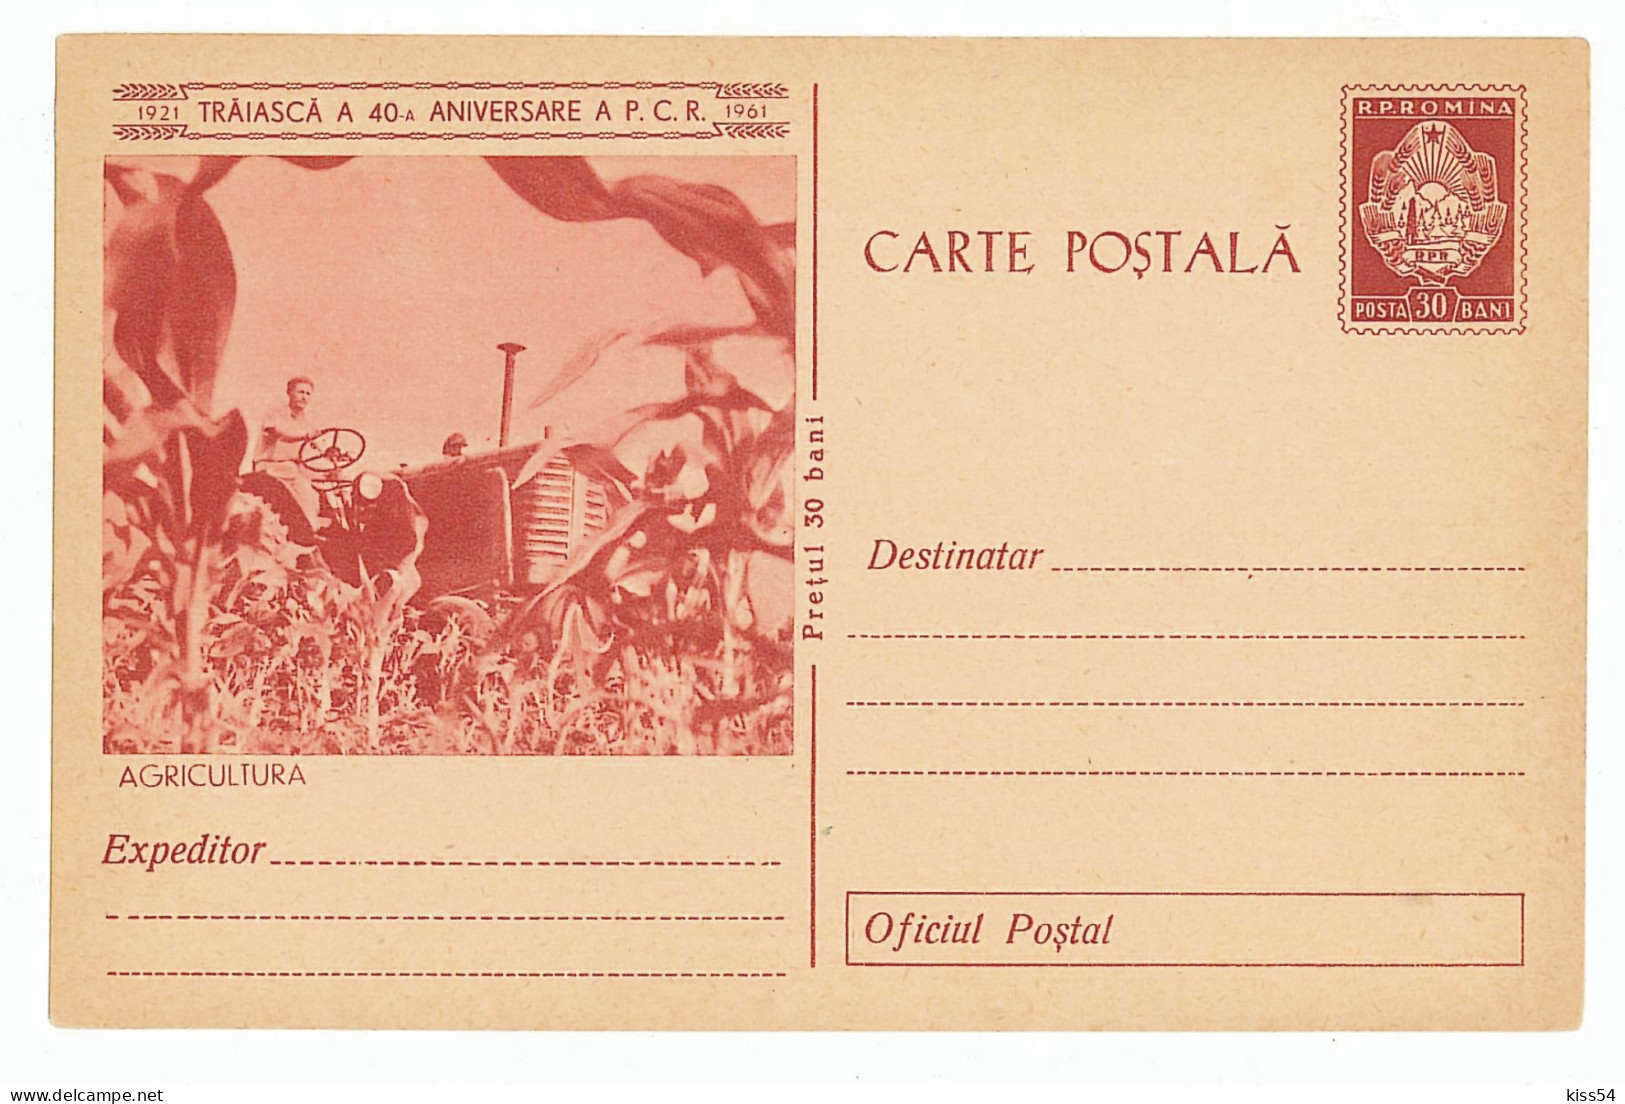 IP 61 C - 93 AGRICULTURE, Corn, Romania - Stationery - Unused - 1961 - Postal Stationery